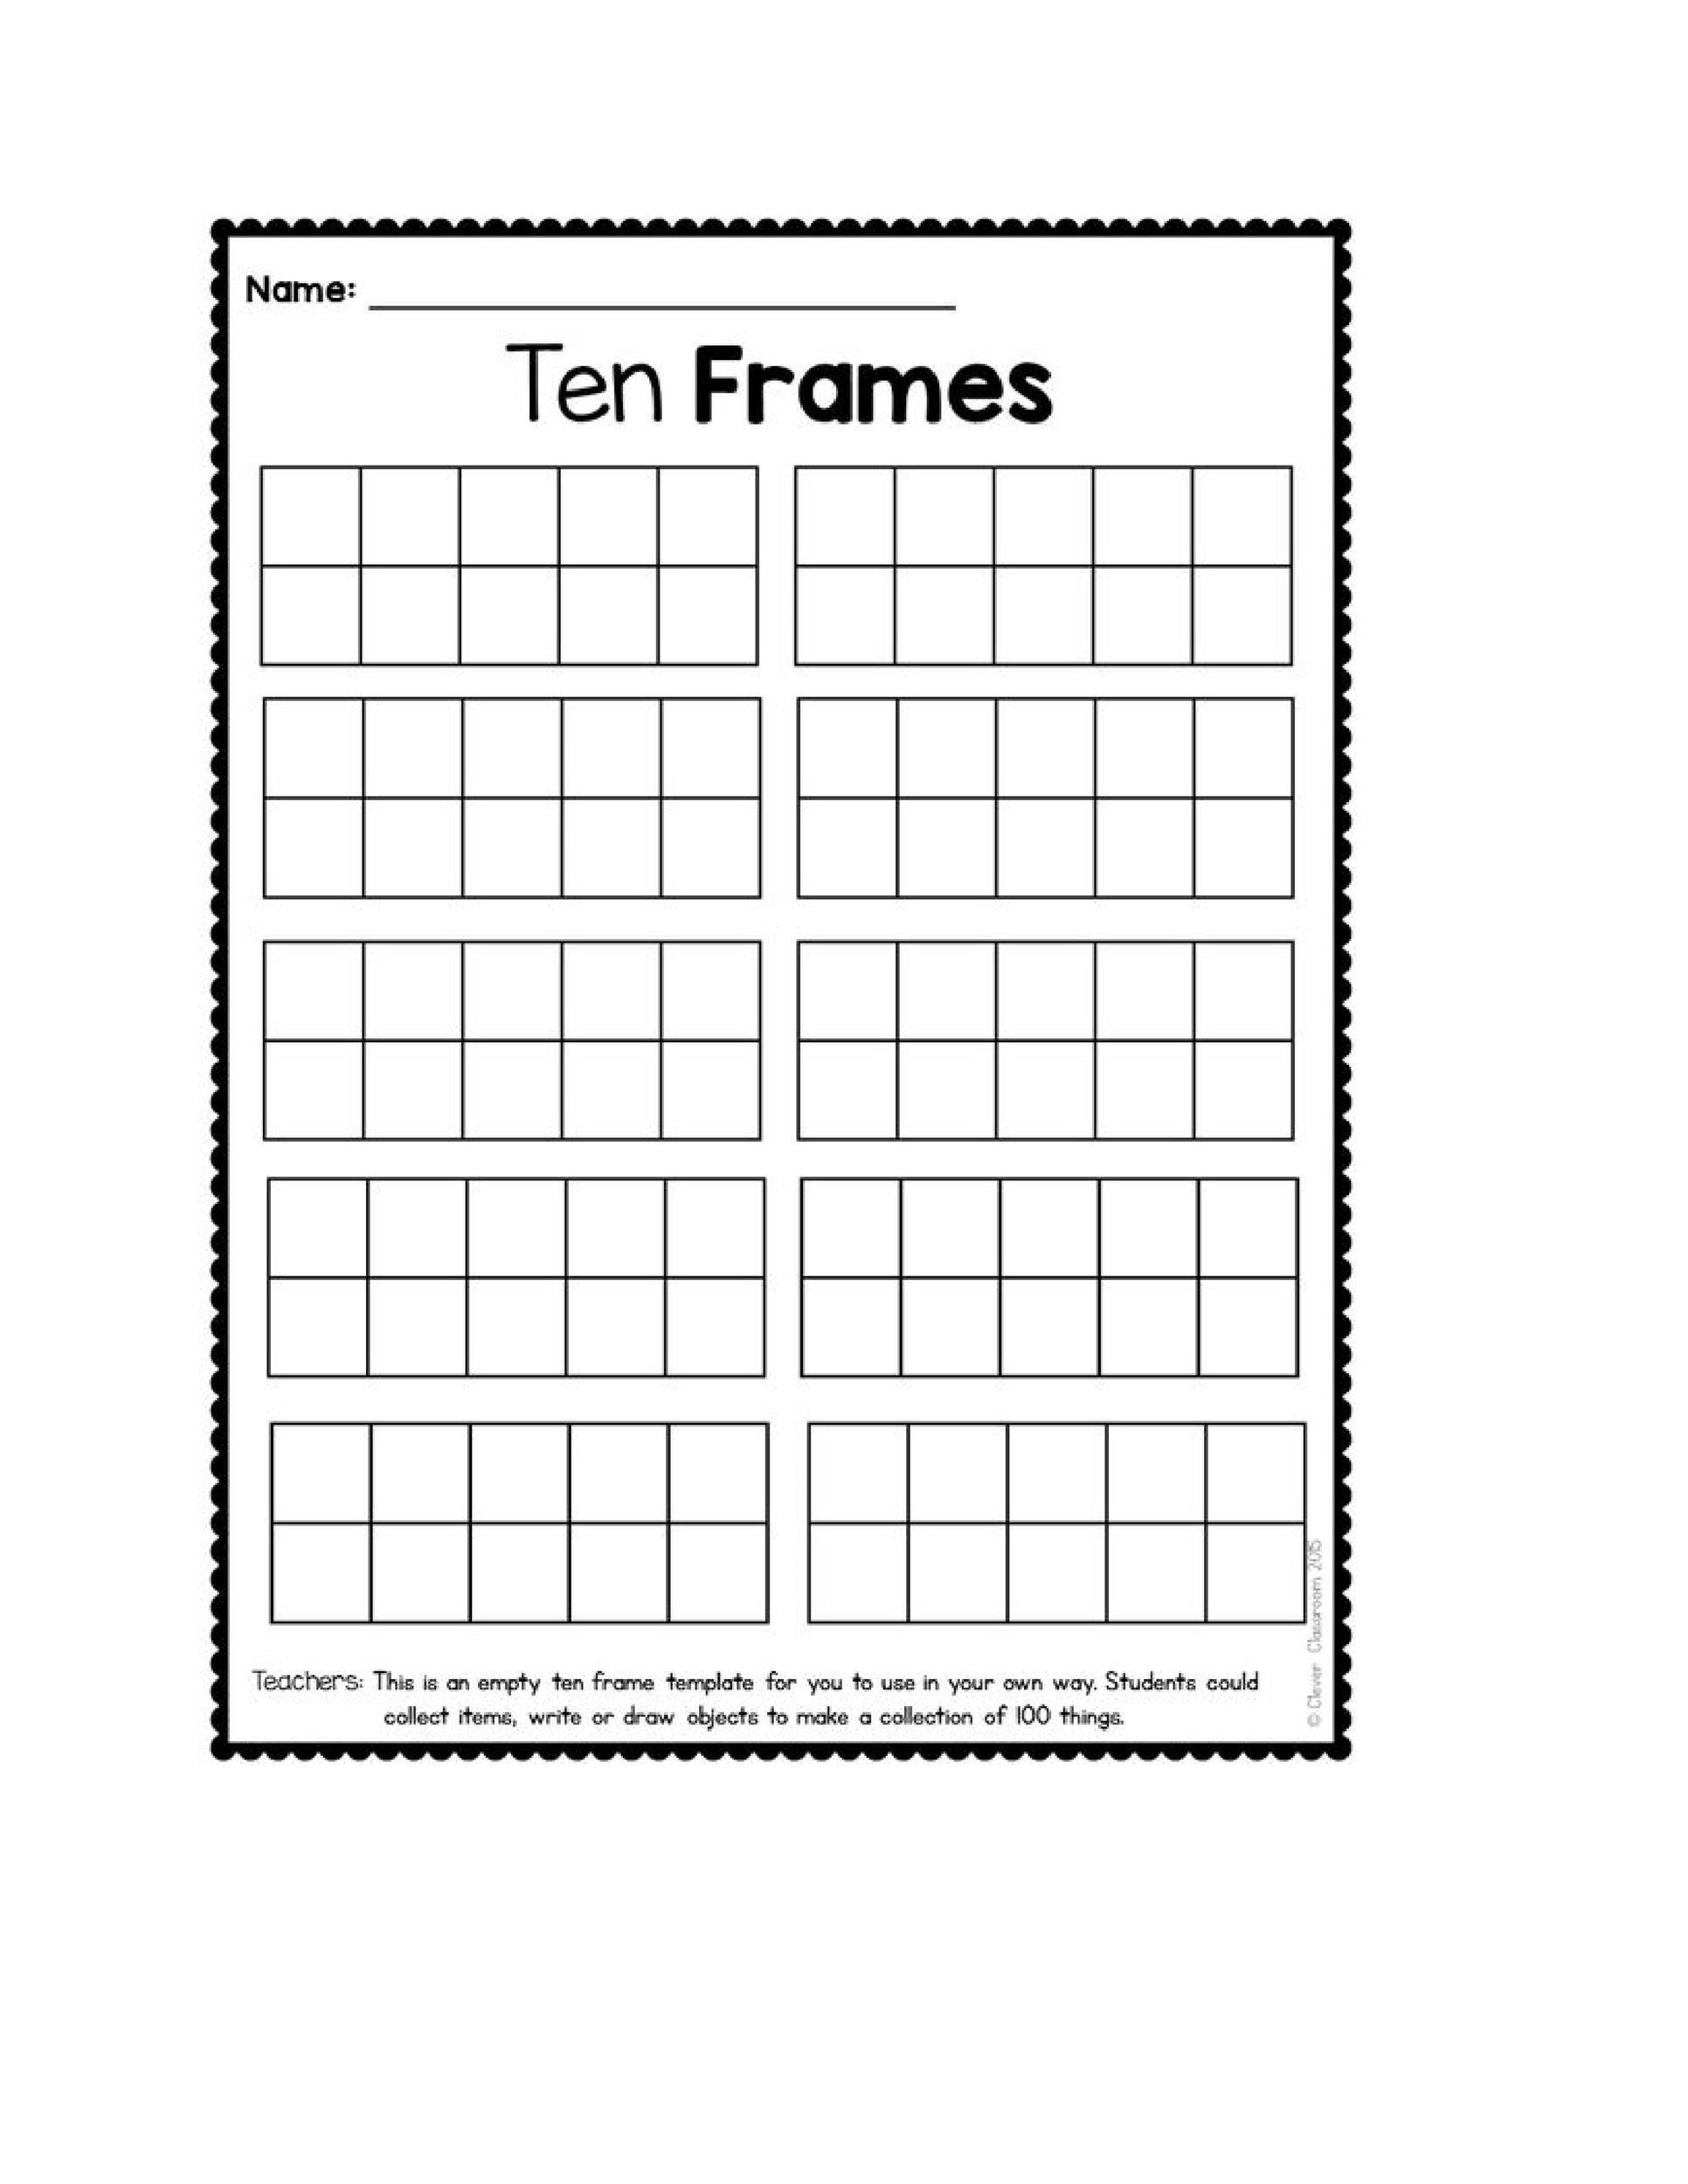 36 Printable Ten Frame Templates (Free) ᐅ TemplateLab